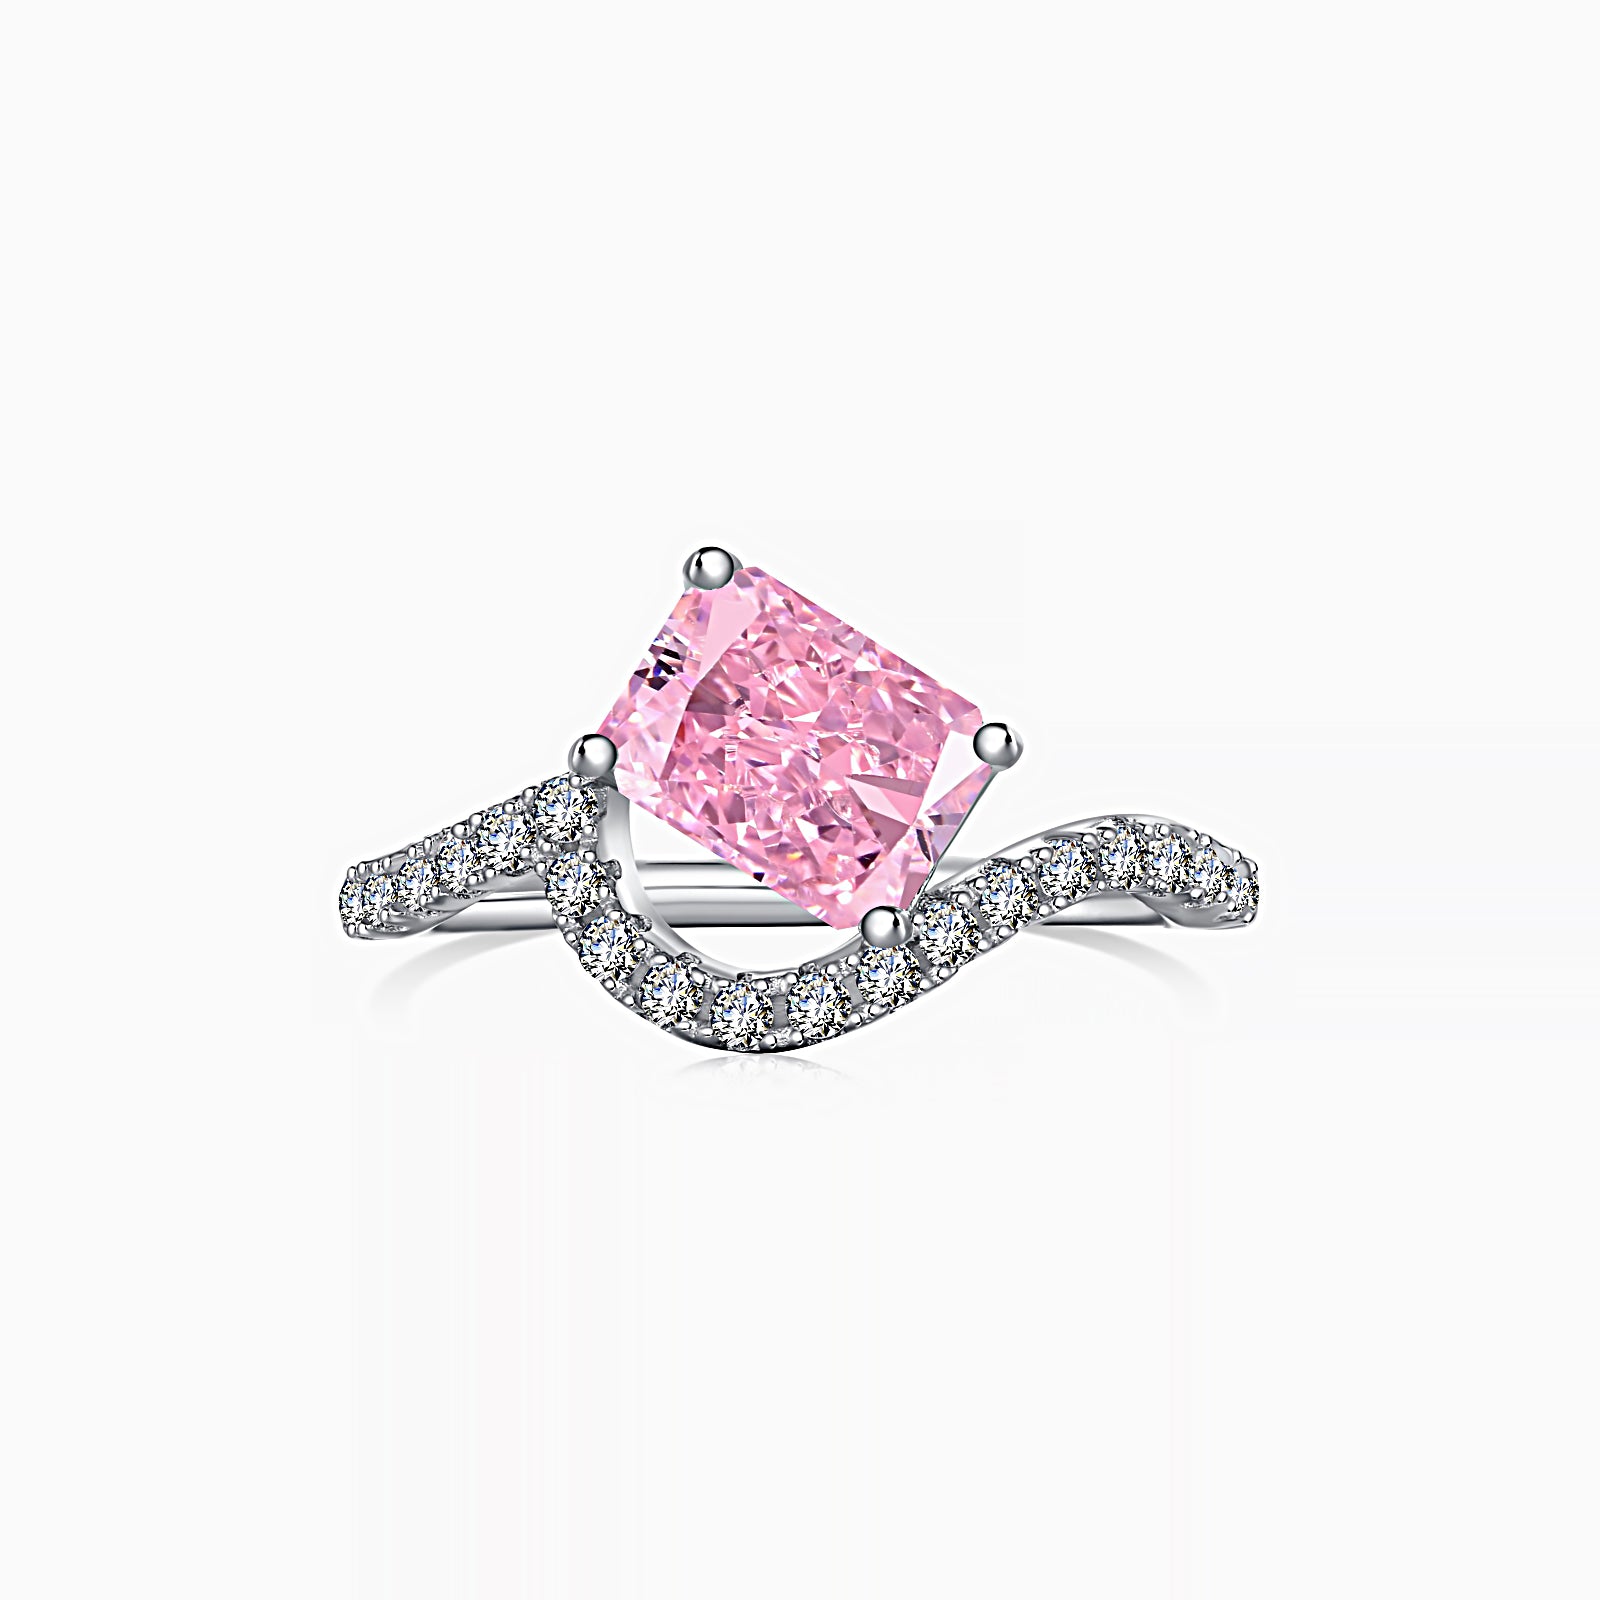 Showroom of 916 gold hallmark pink stone design ring | Jewelxy - 166087